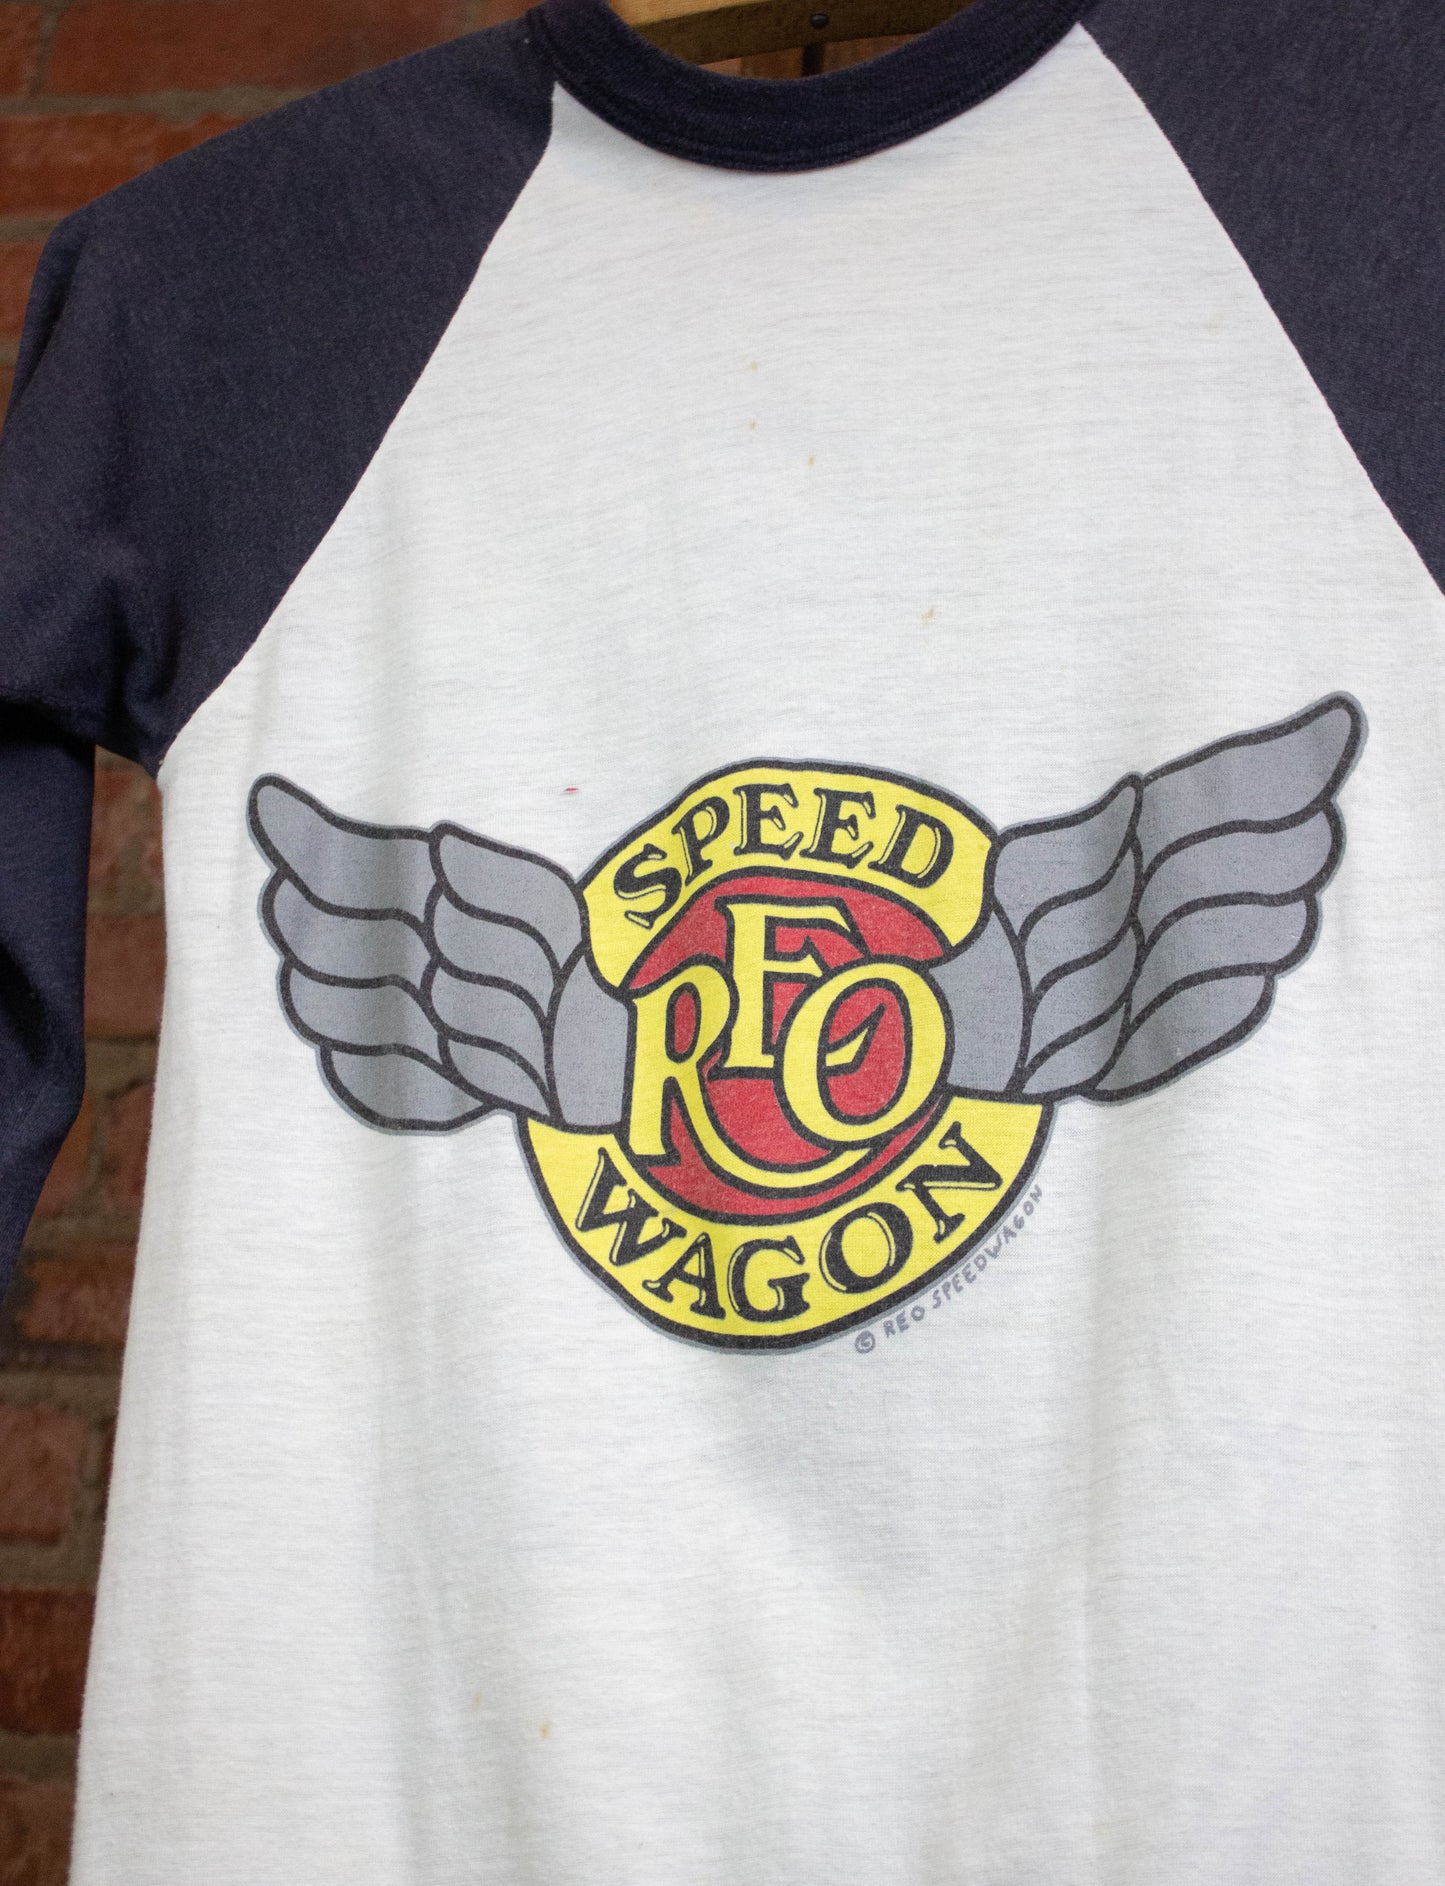 Vintage REO Speedwagon 1981 Raglan Concert T Shirt White and Navy XS